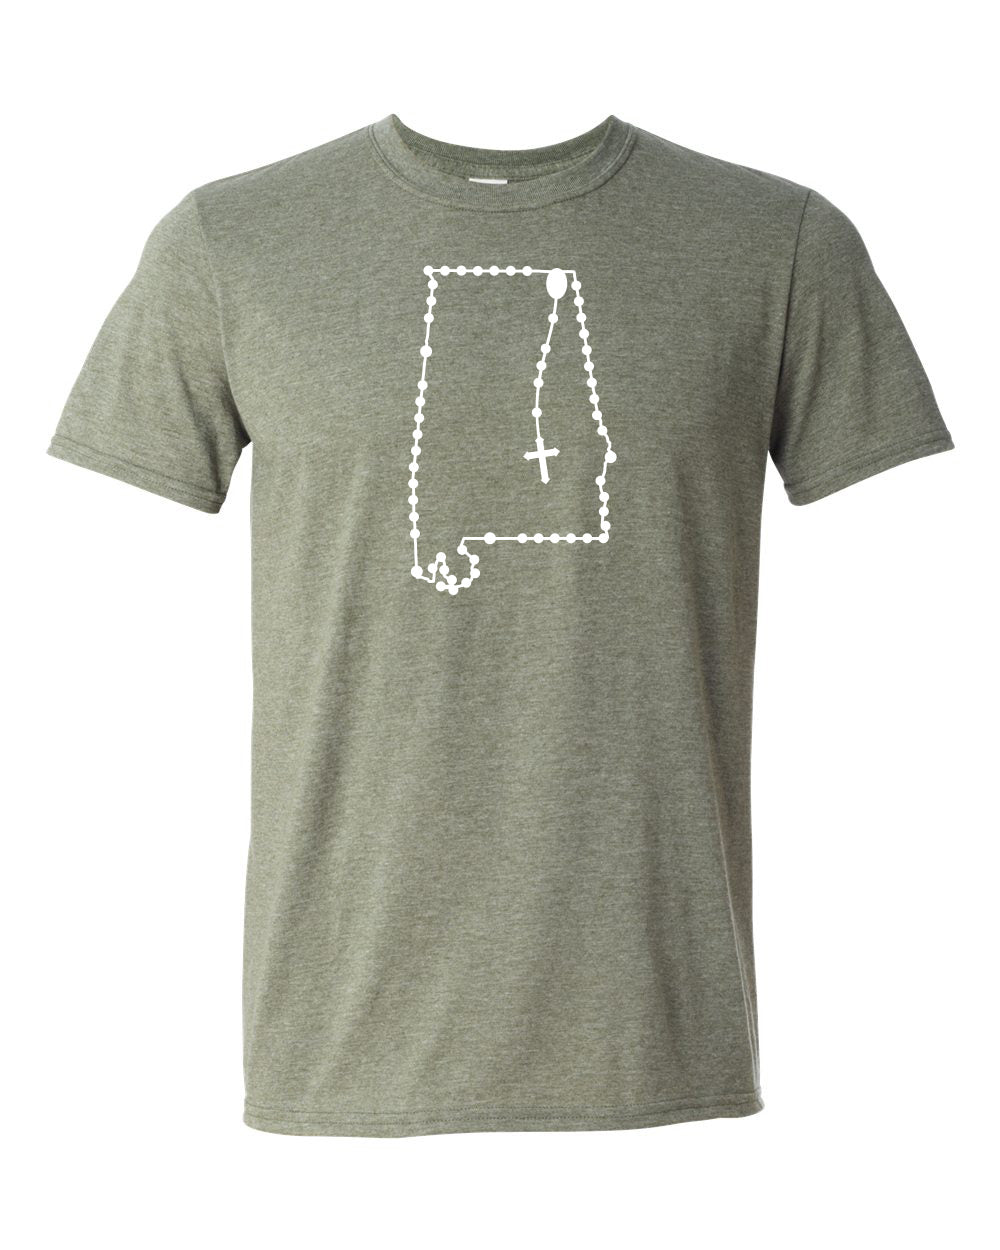 Alabama State Catholic Rosary Custom T-shirt Gift, State Pride, graphic tees, oversized - shirt - front heathered military green